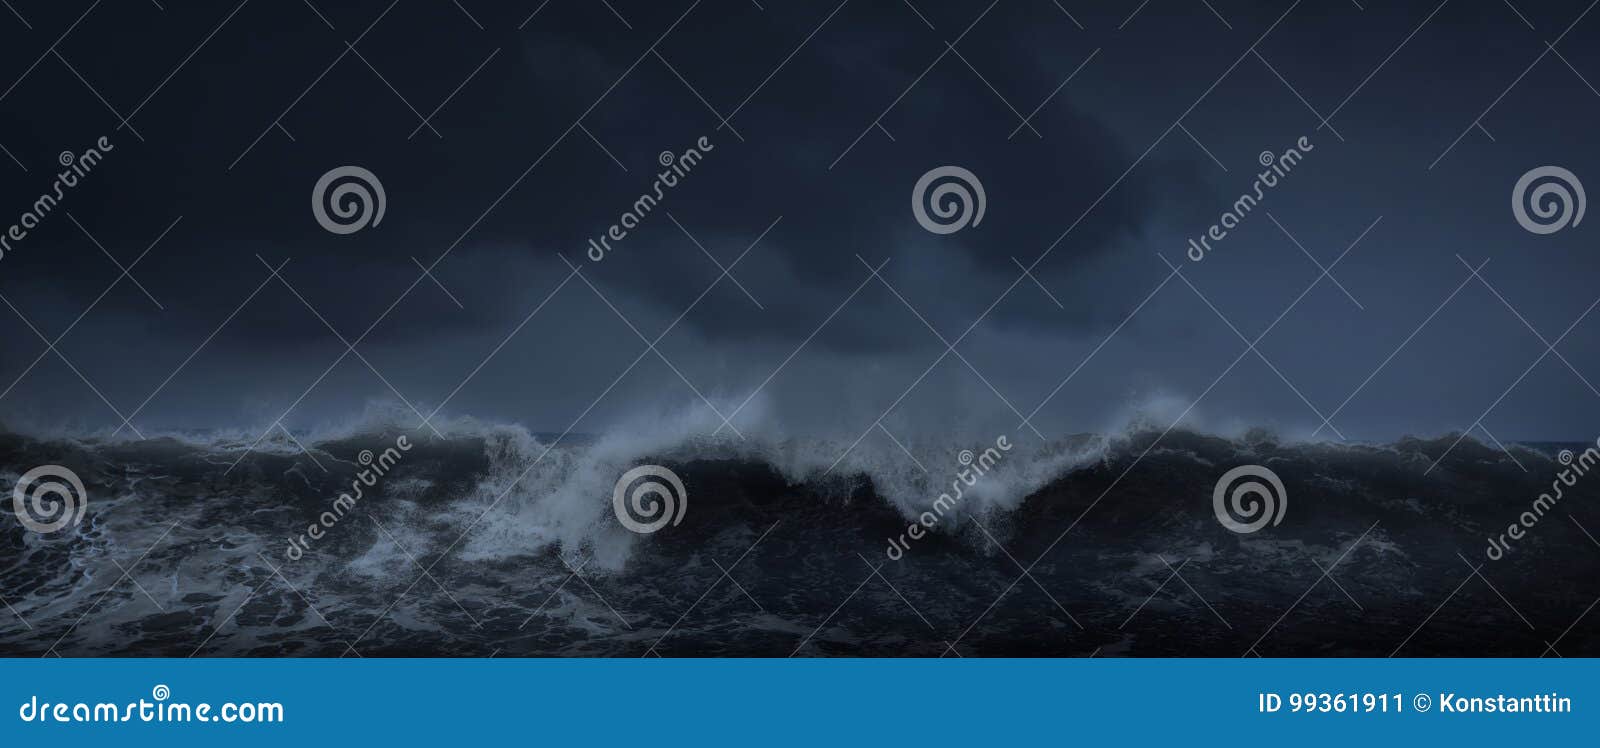 dark sea stormy background